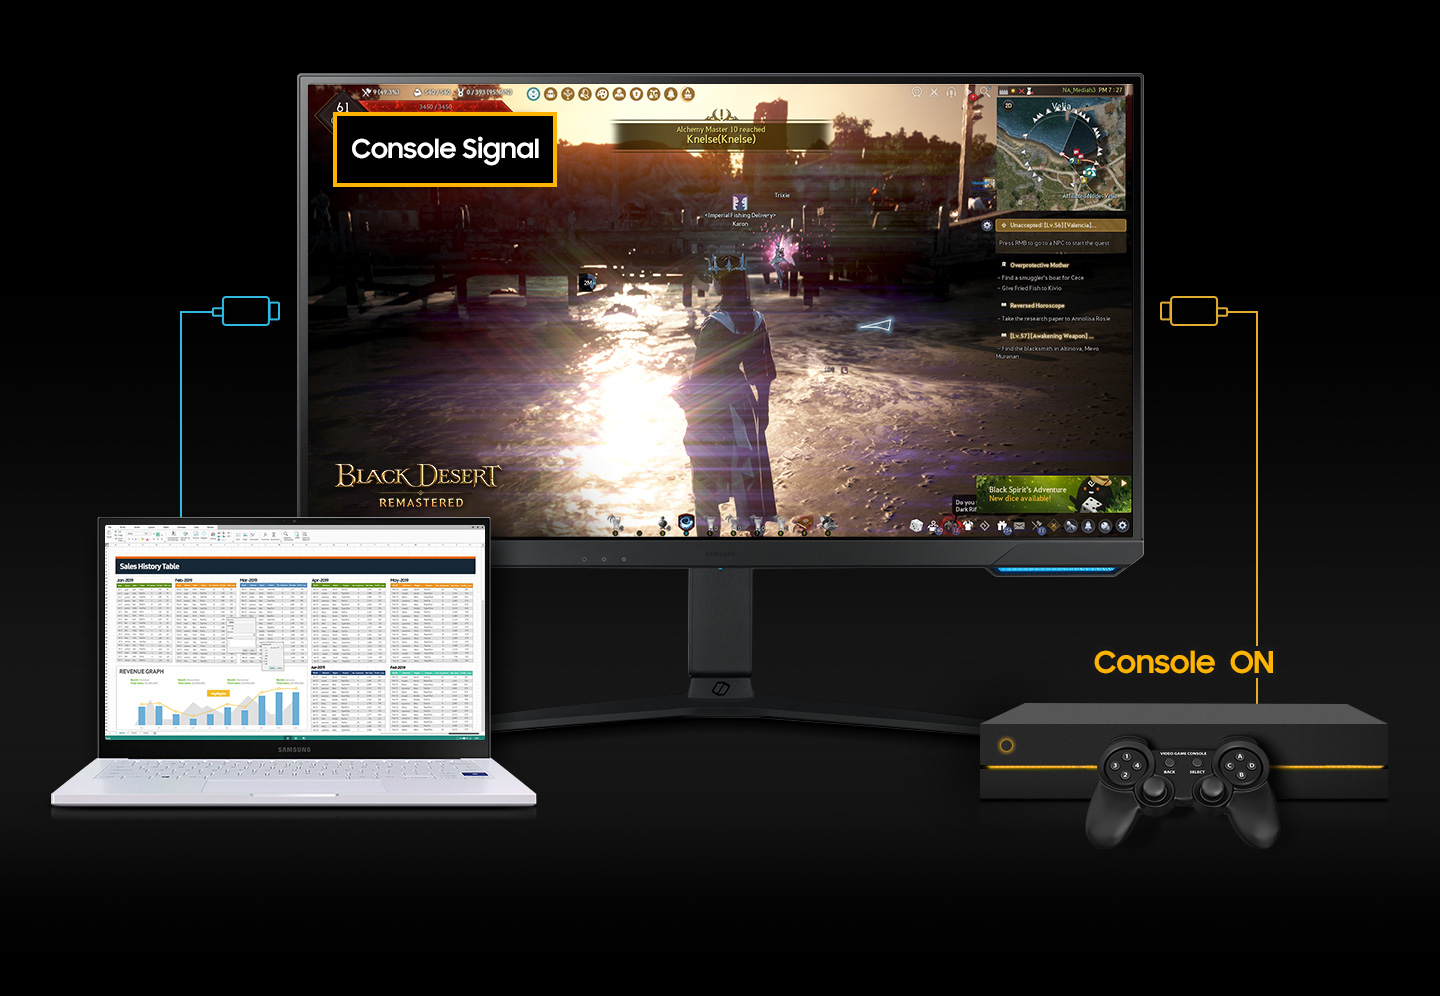 Monitor Gamer Samsung Odyssey G7, 28 Pulgadas UHD144Hz 1ms Panel IPS  Compatible con G-Sync